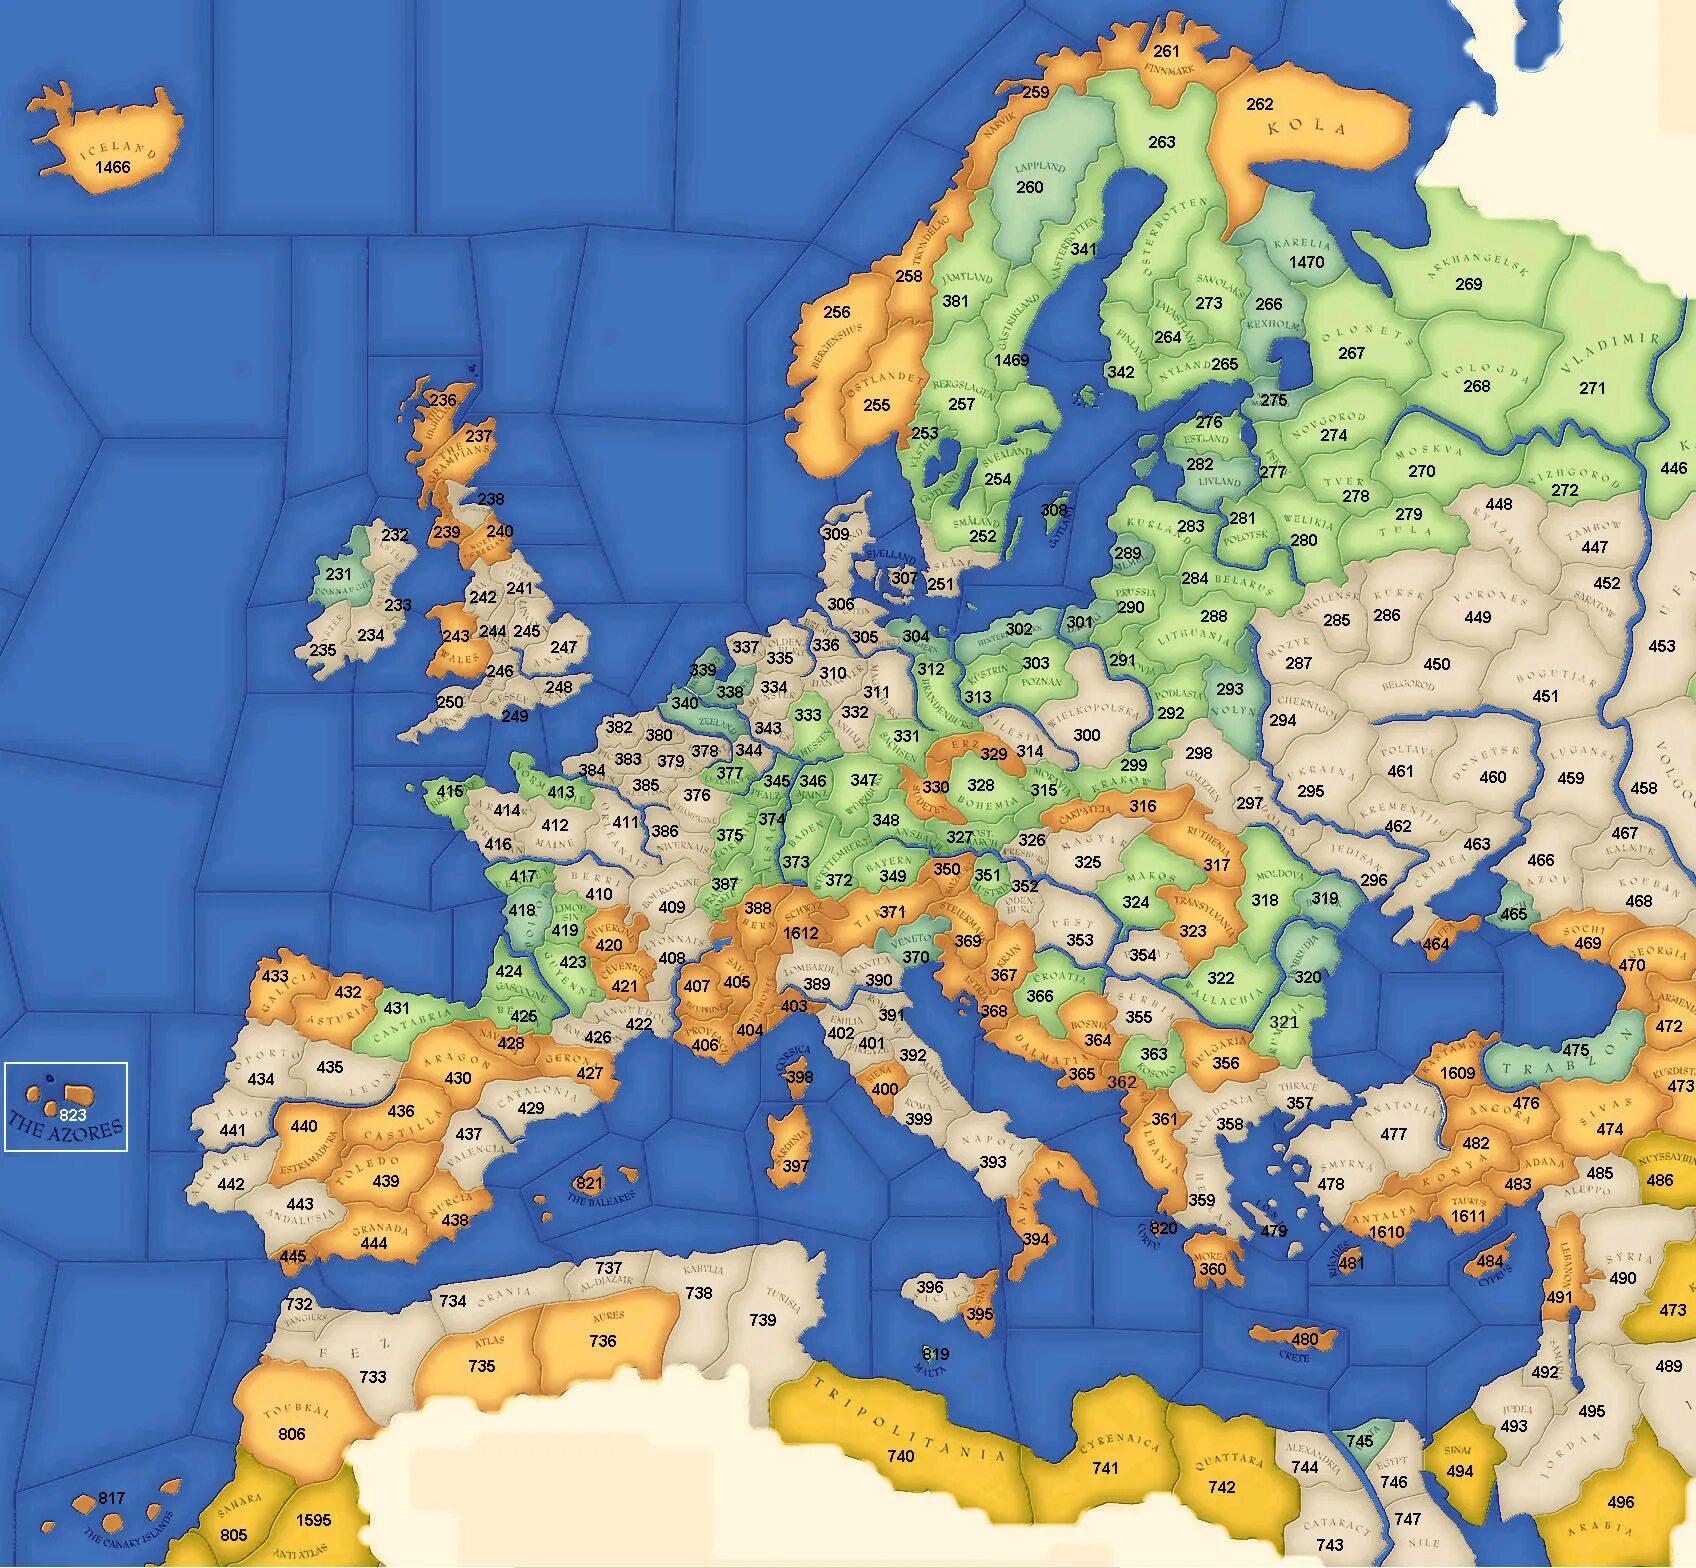 Europa 1 2. Европа Универсалис 4 карта. Карта ID провинций Europa Universalis 4 Европа. Европа Универсалис 2 карта. Europa Universalis 4 карта Европы.